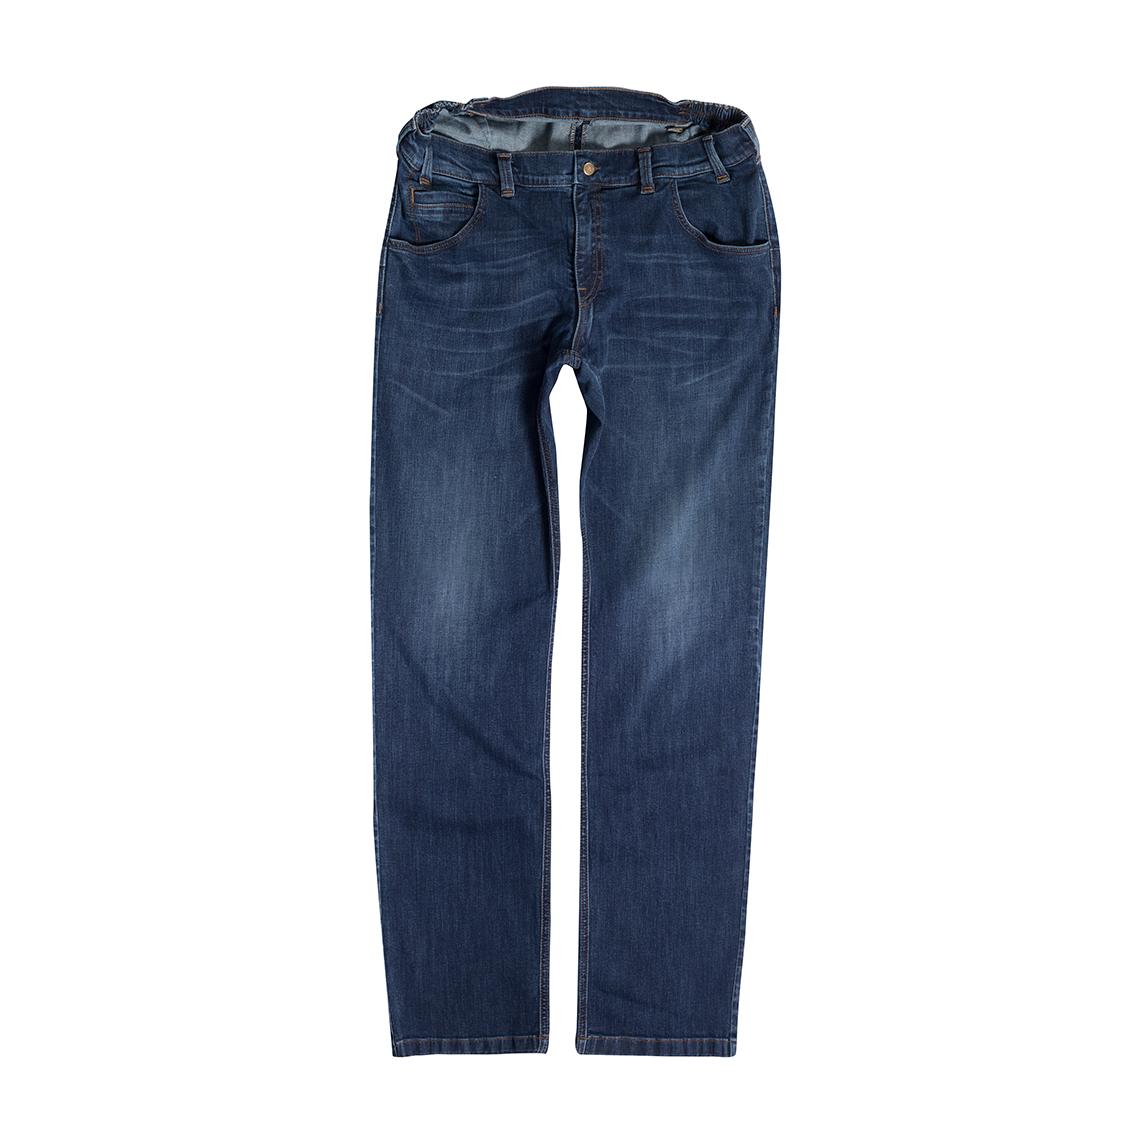 Herren Jeans  Fashion washed, blau MIKE 10391 52